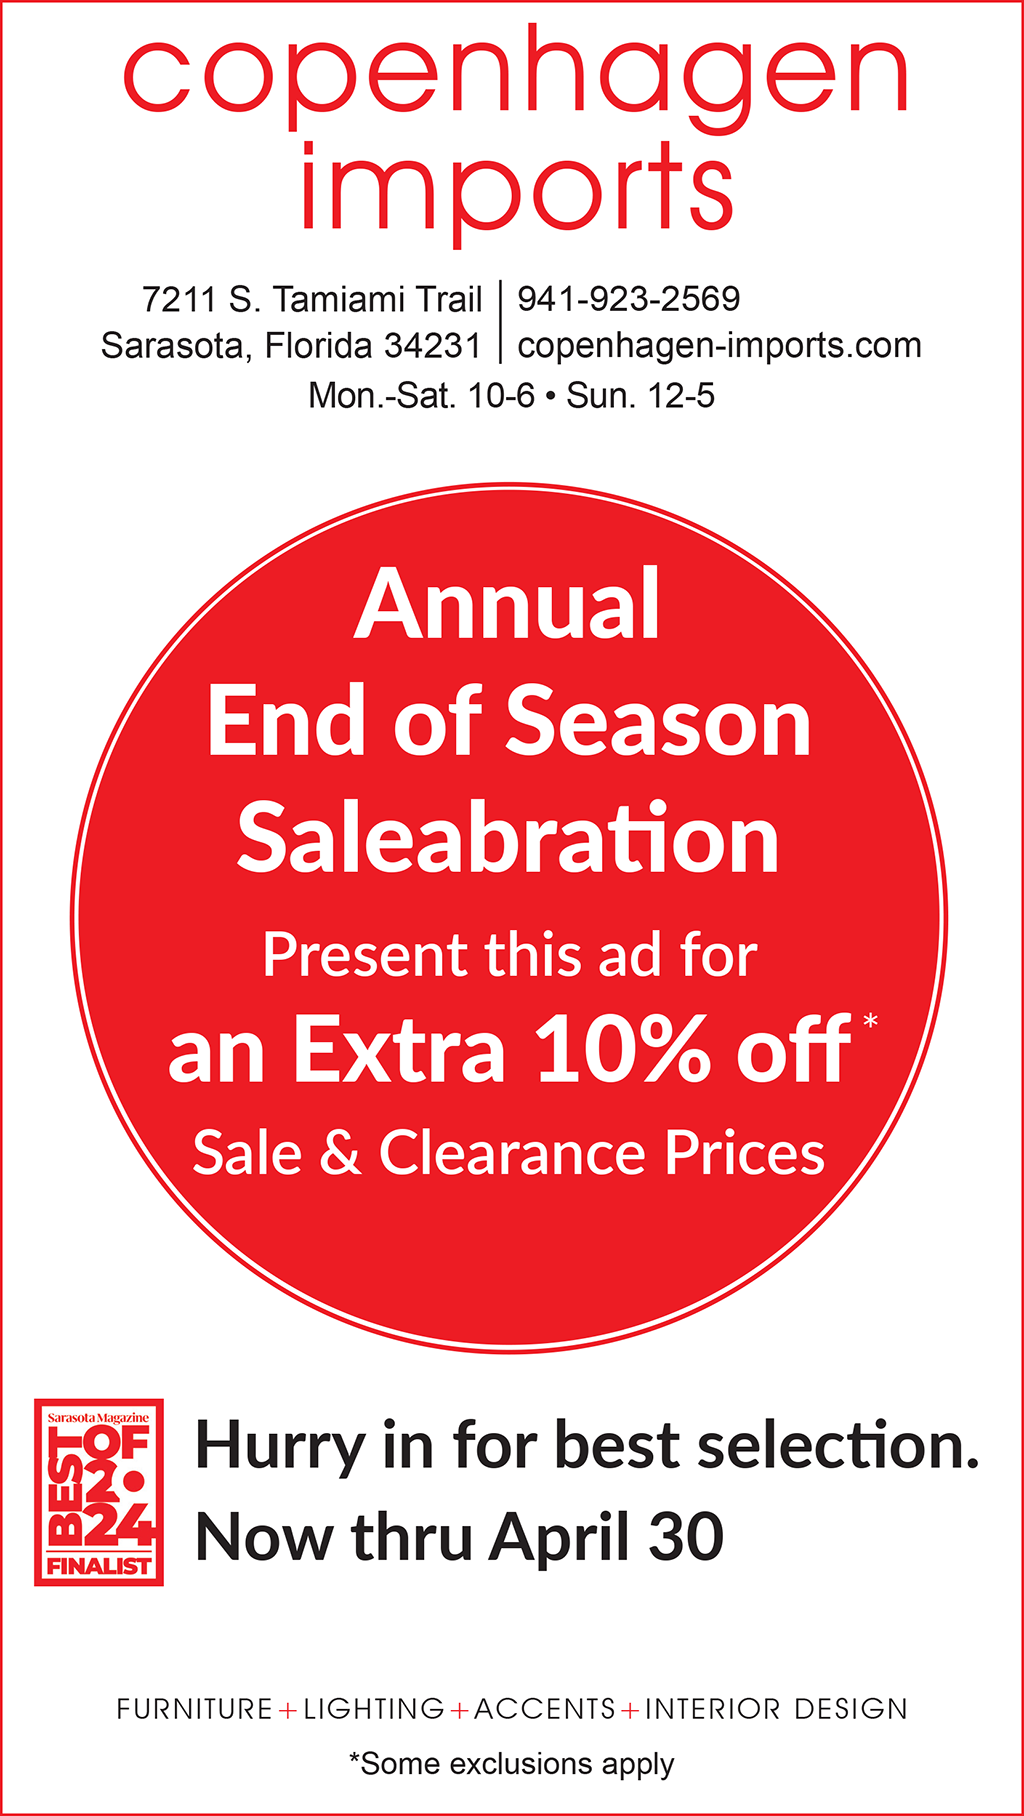 Annual End of Season Saleabration